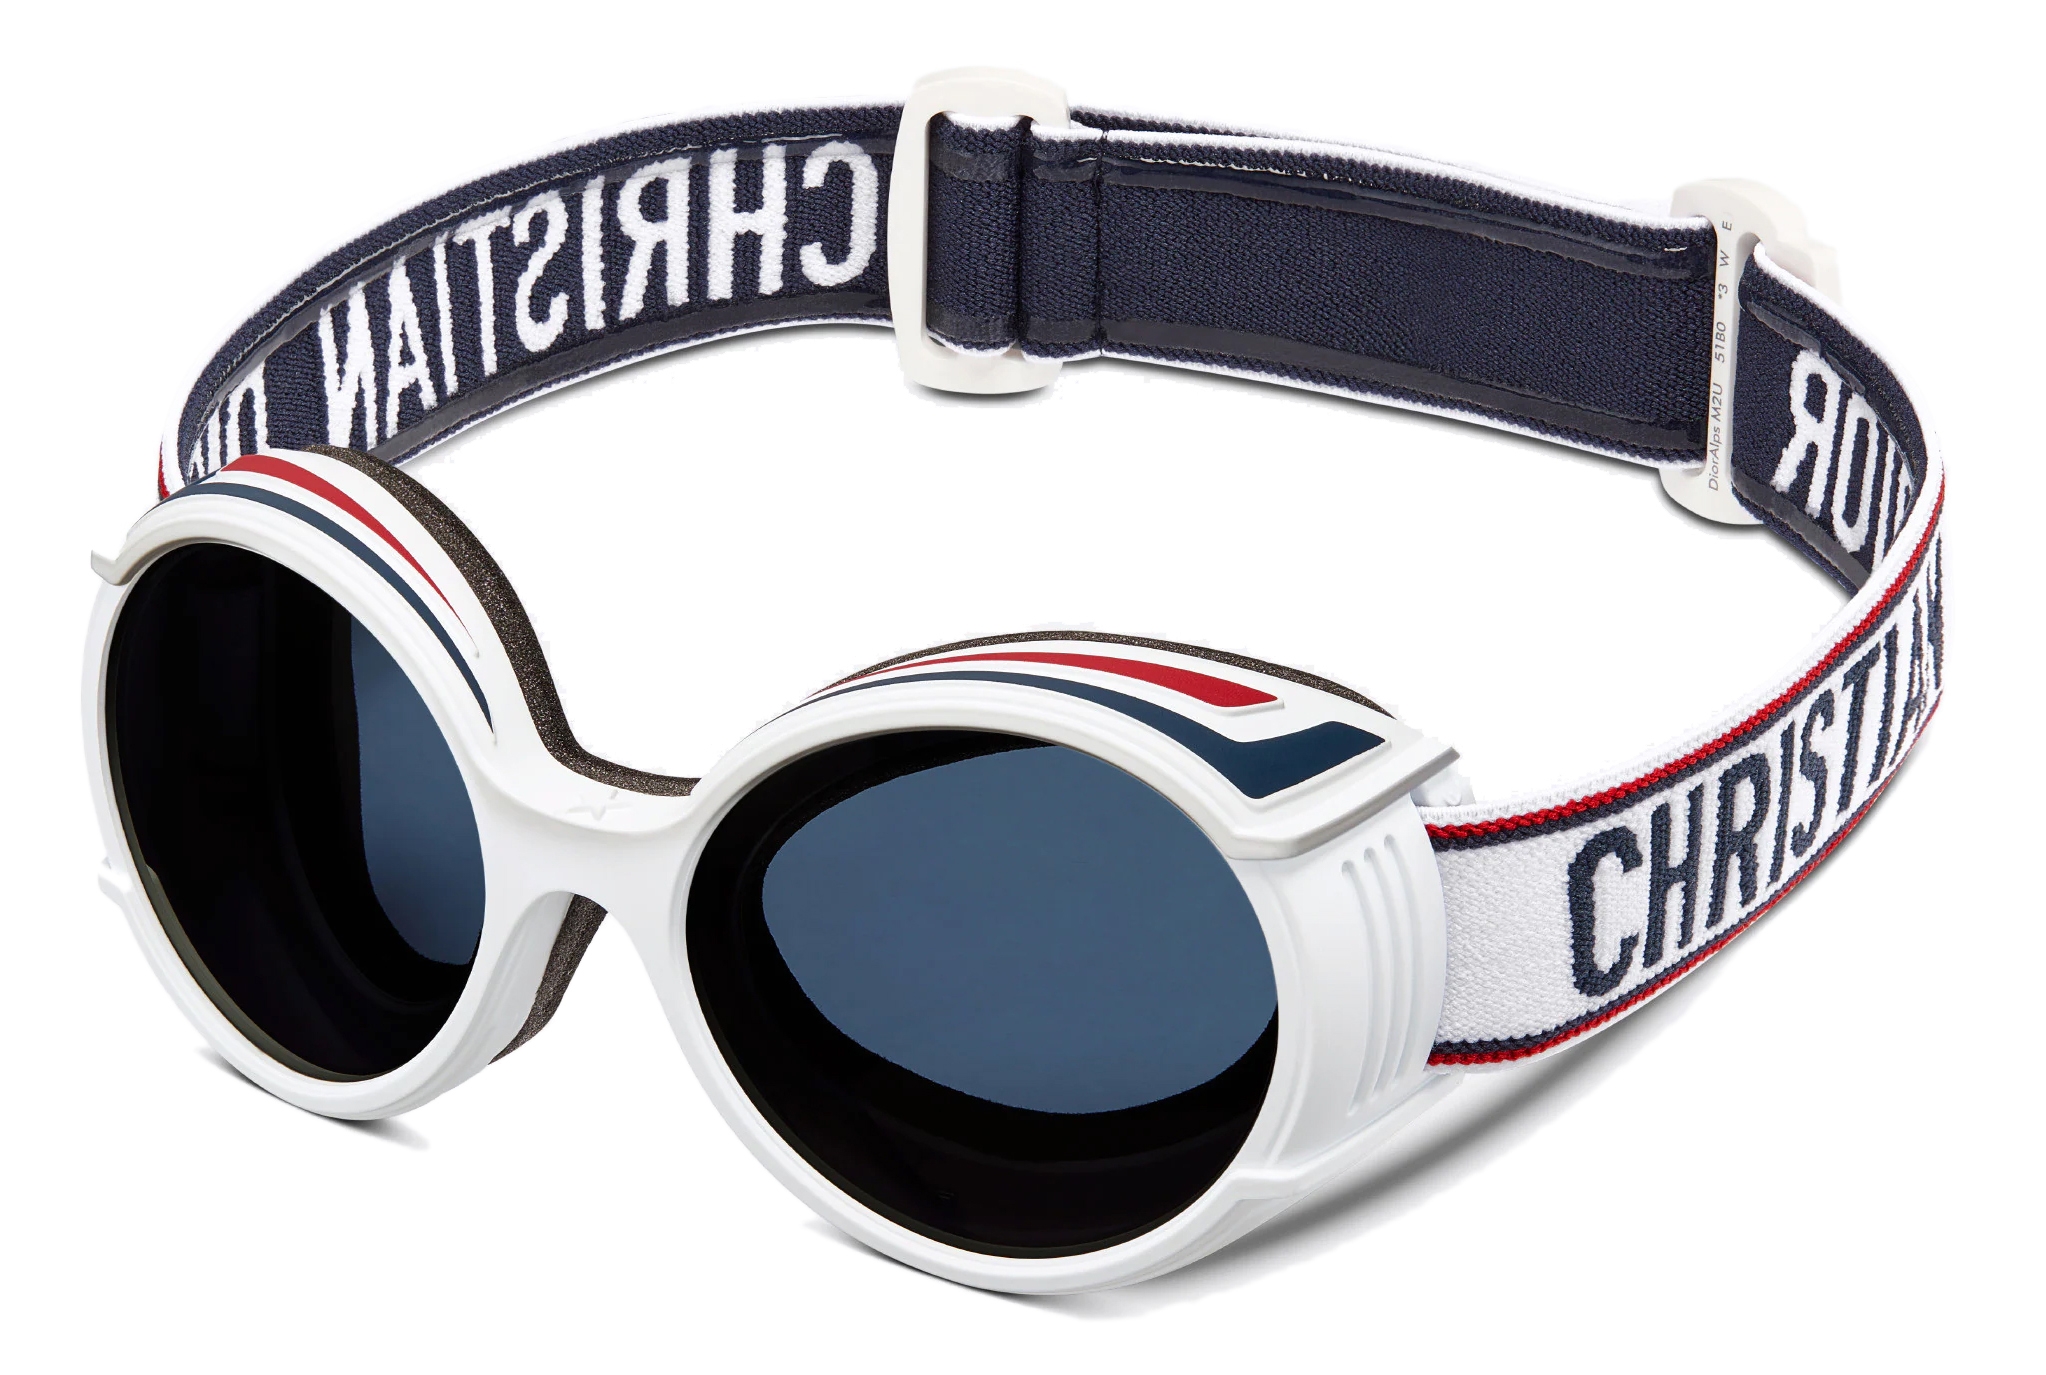 Dior - Sunglasses - DiorAlps M2U - White Blue Red - Dior Eyewear - Avvenice